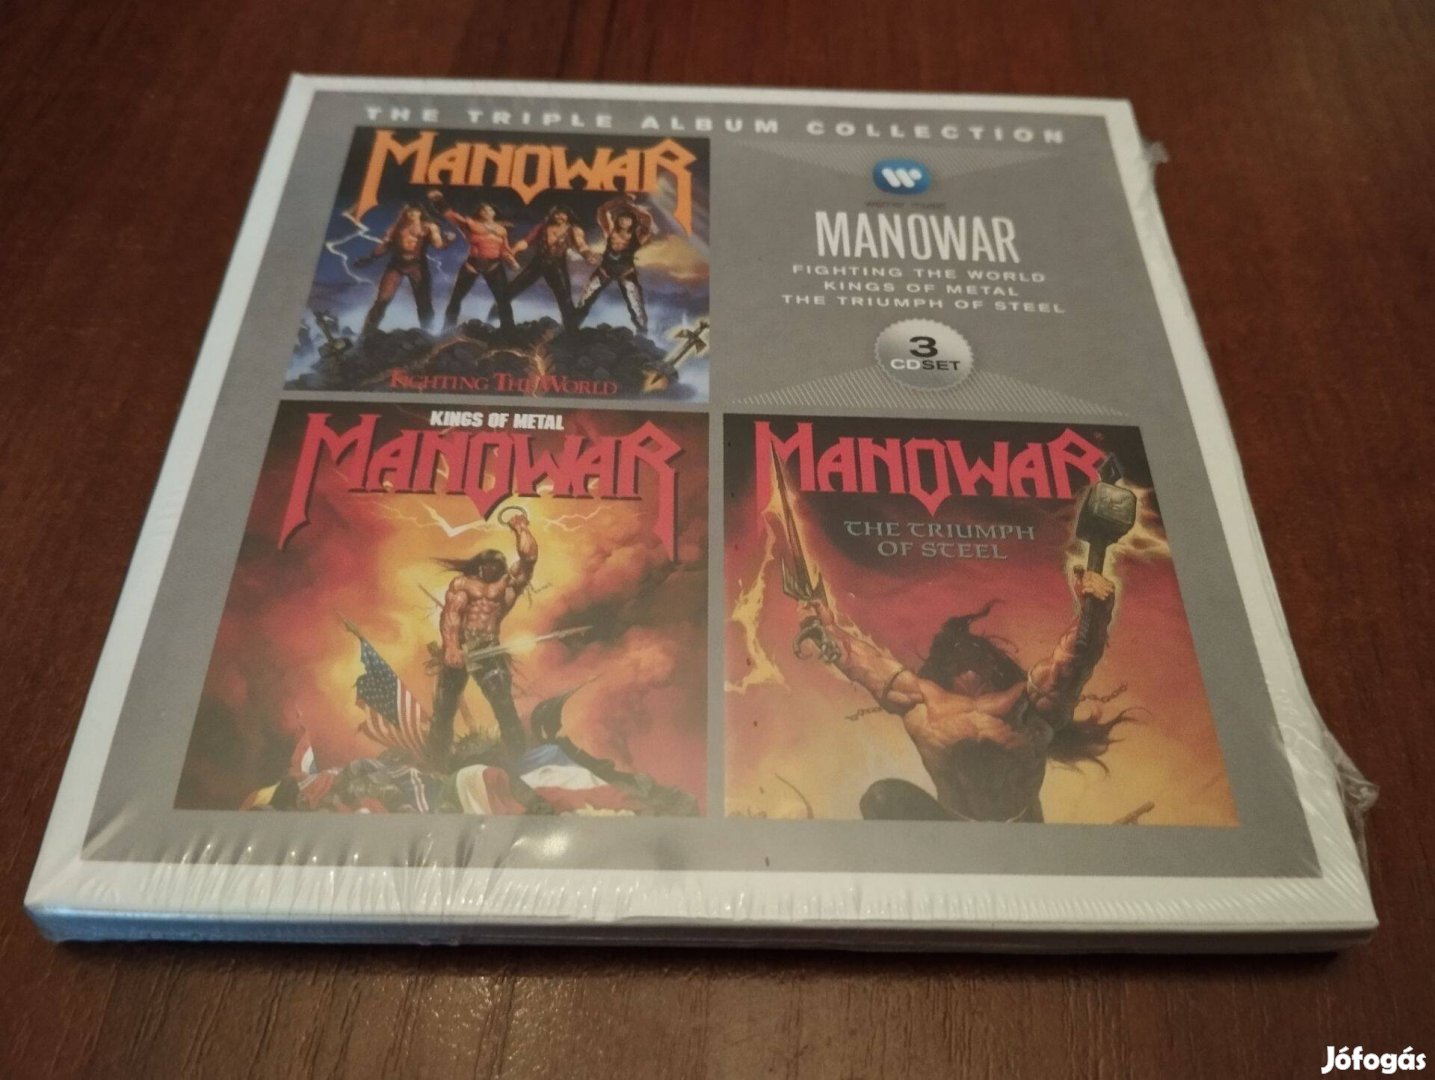 Manowar 3CD szet